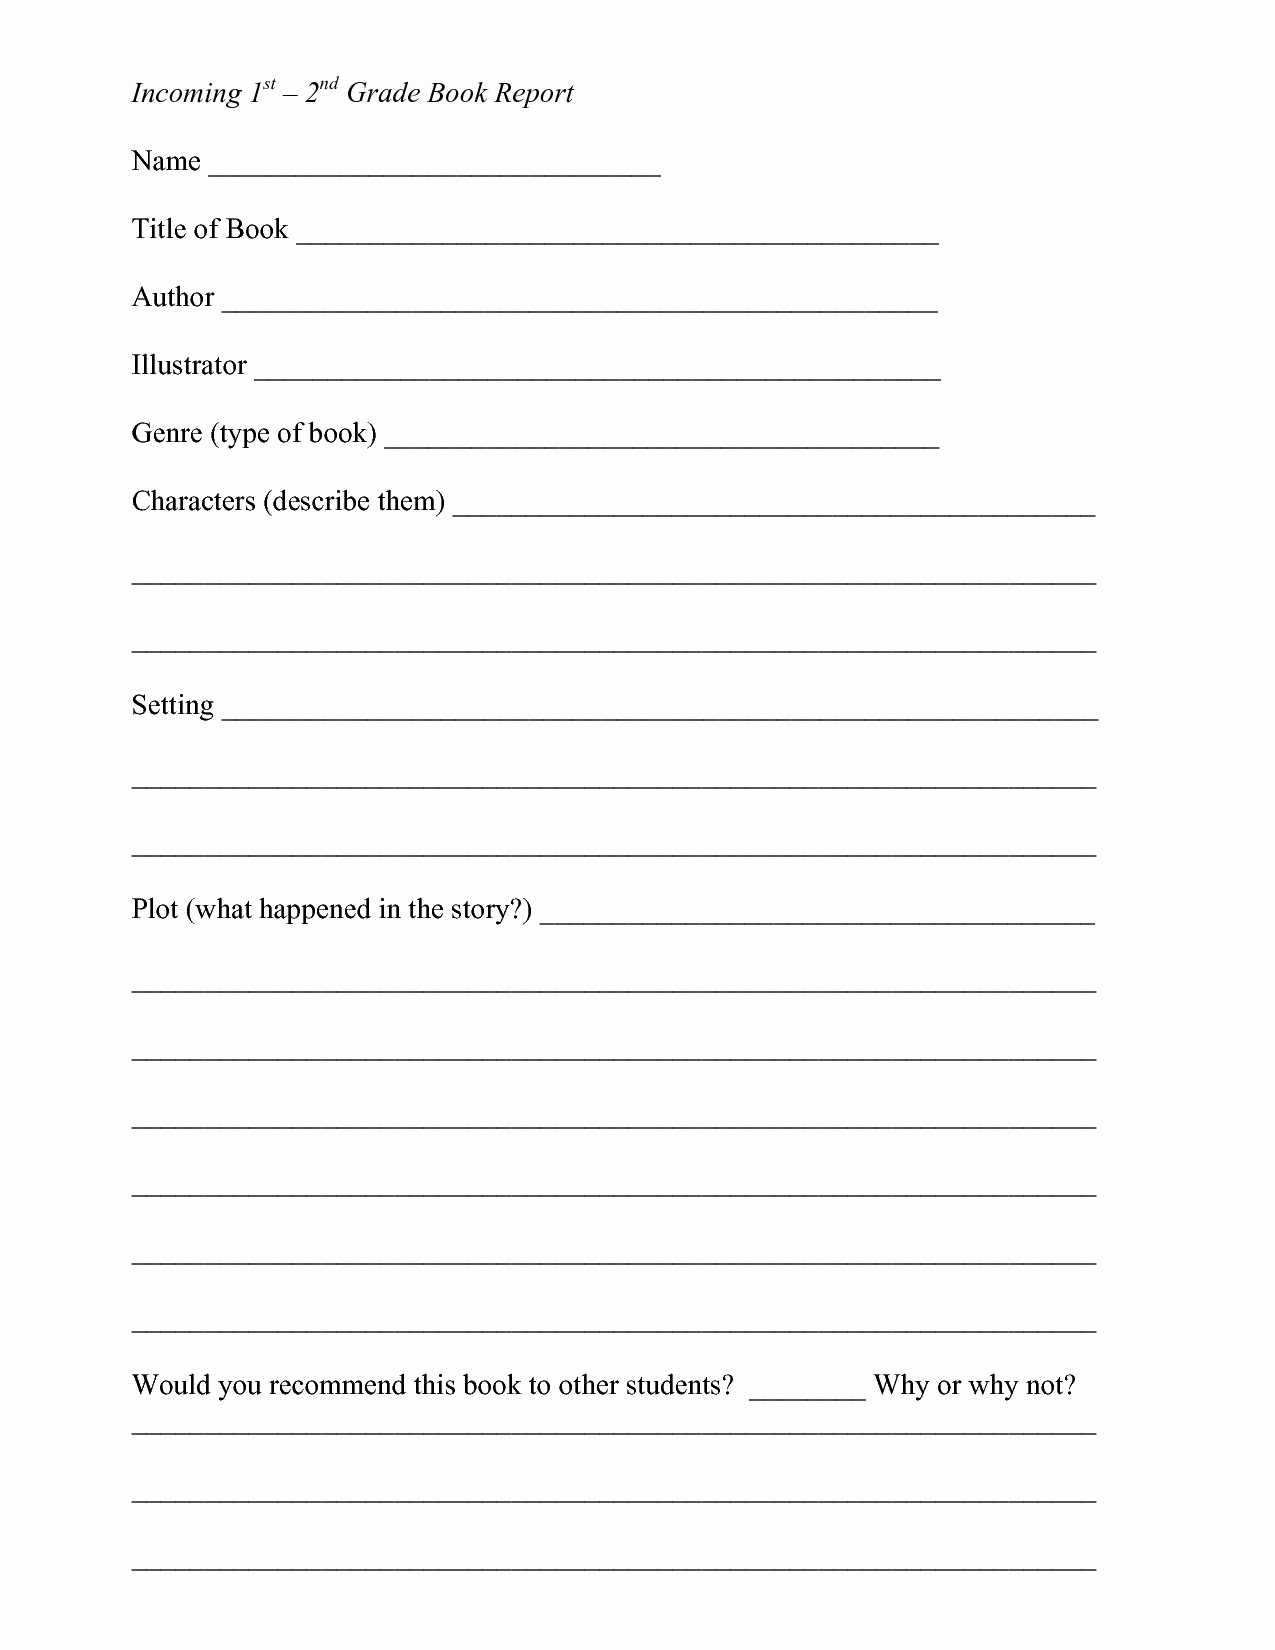 1St Grade Book Report Worksheets | Printable Worksheets And With Regard To First Grade Book Report Template